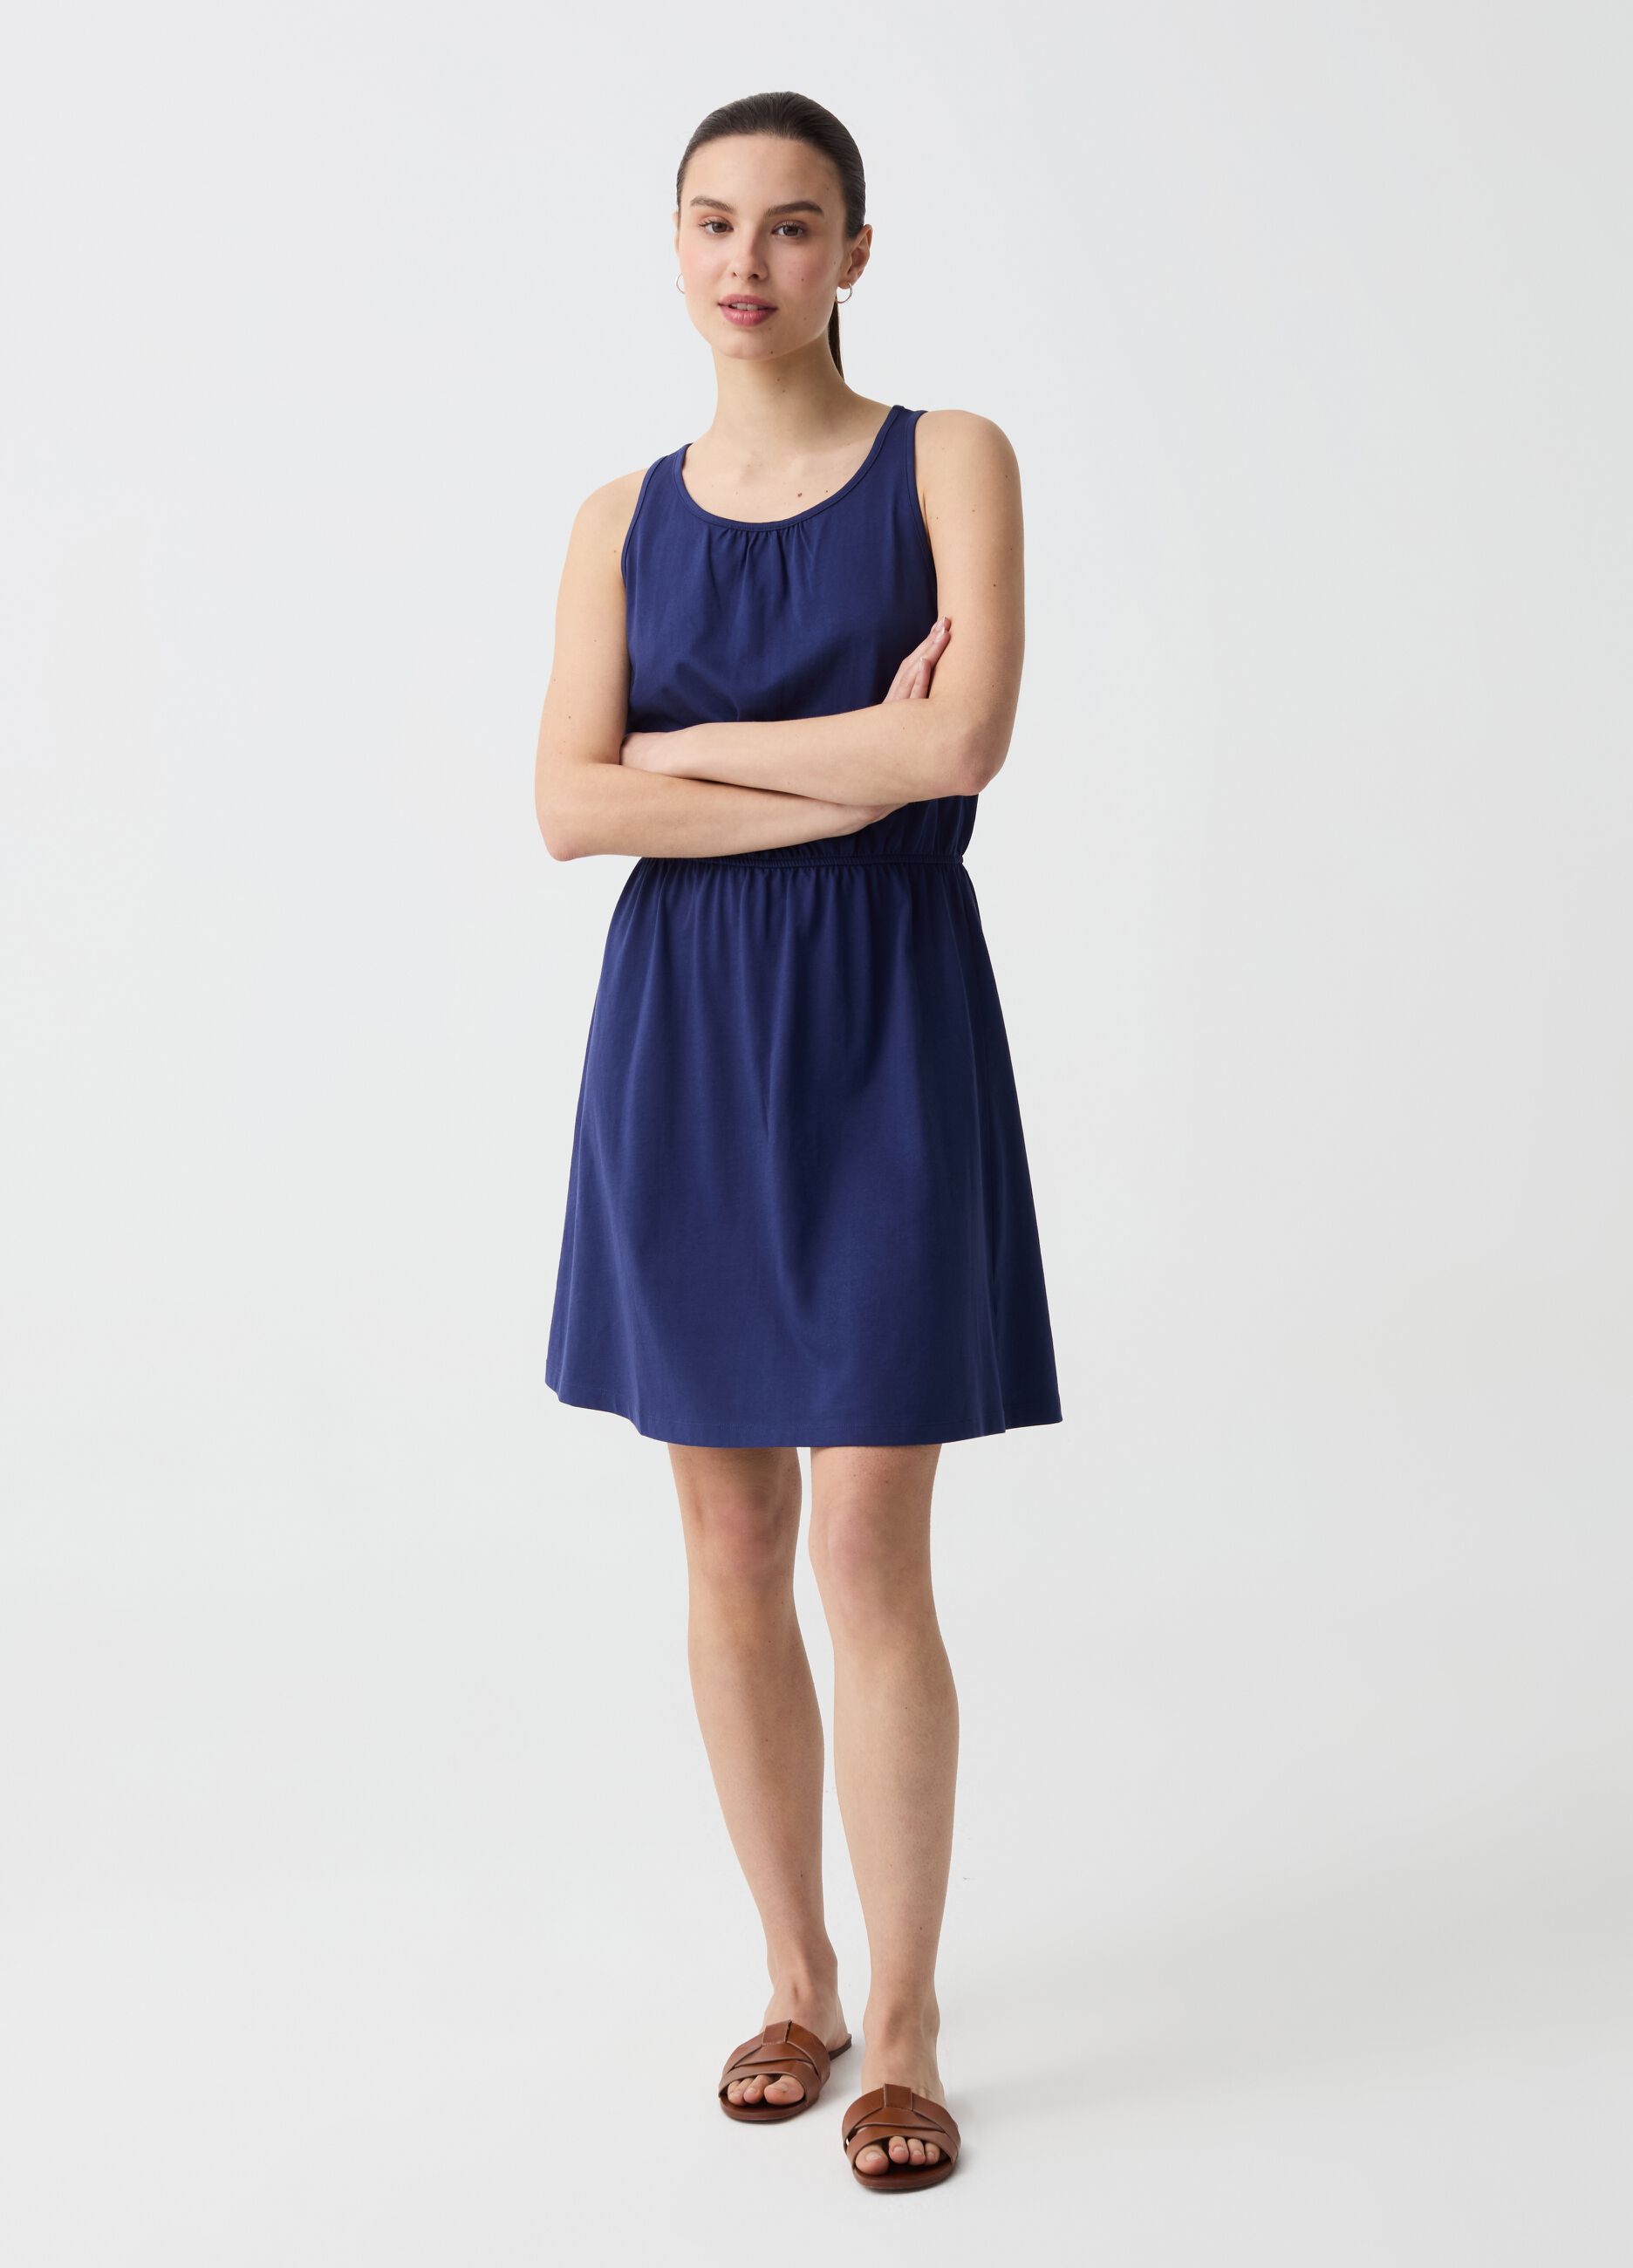 Essential sleeveless dress in cotton